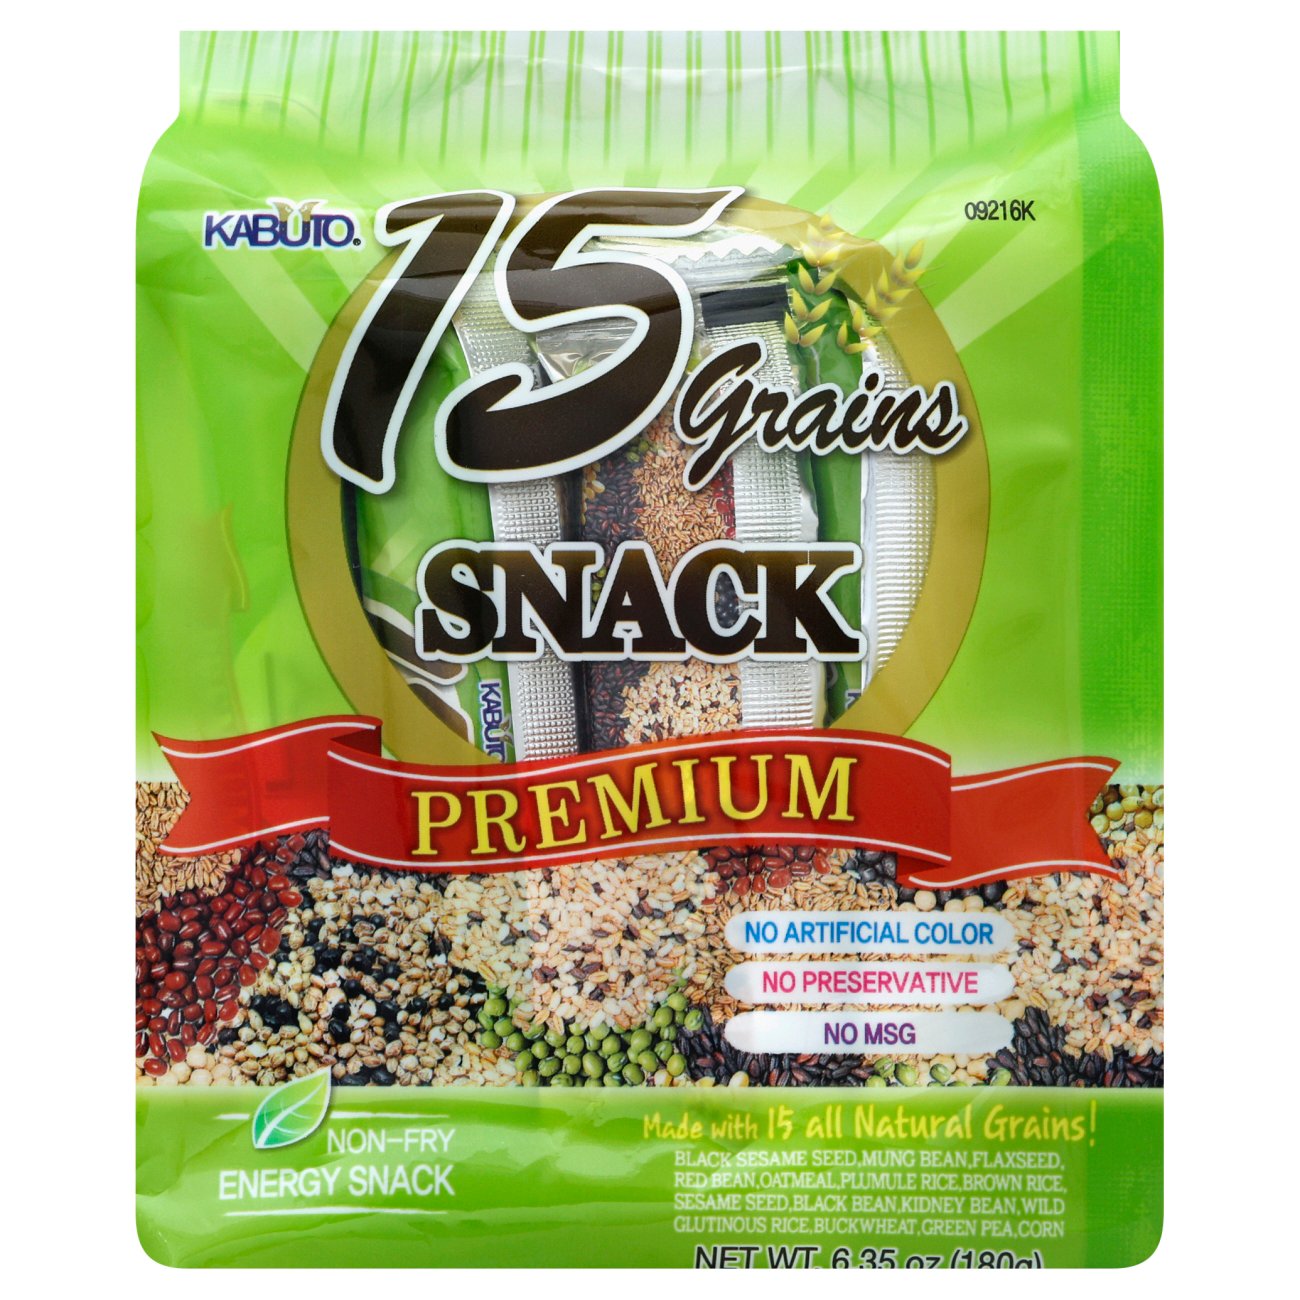 Kabuto 15 Grains Healthy Snack Premium - Shop Chips at H-E-B